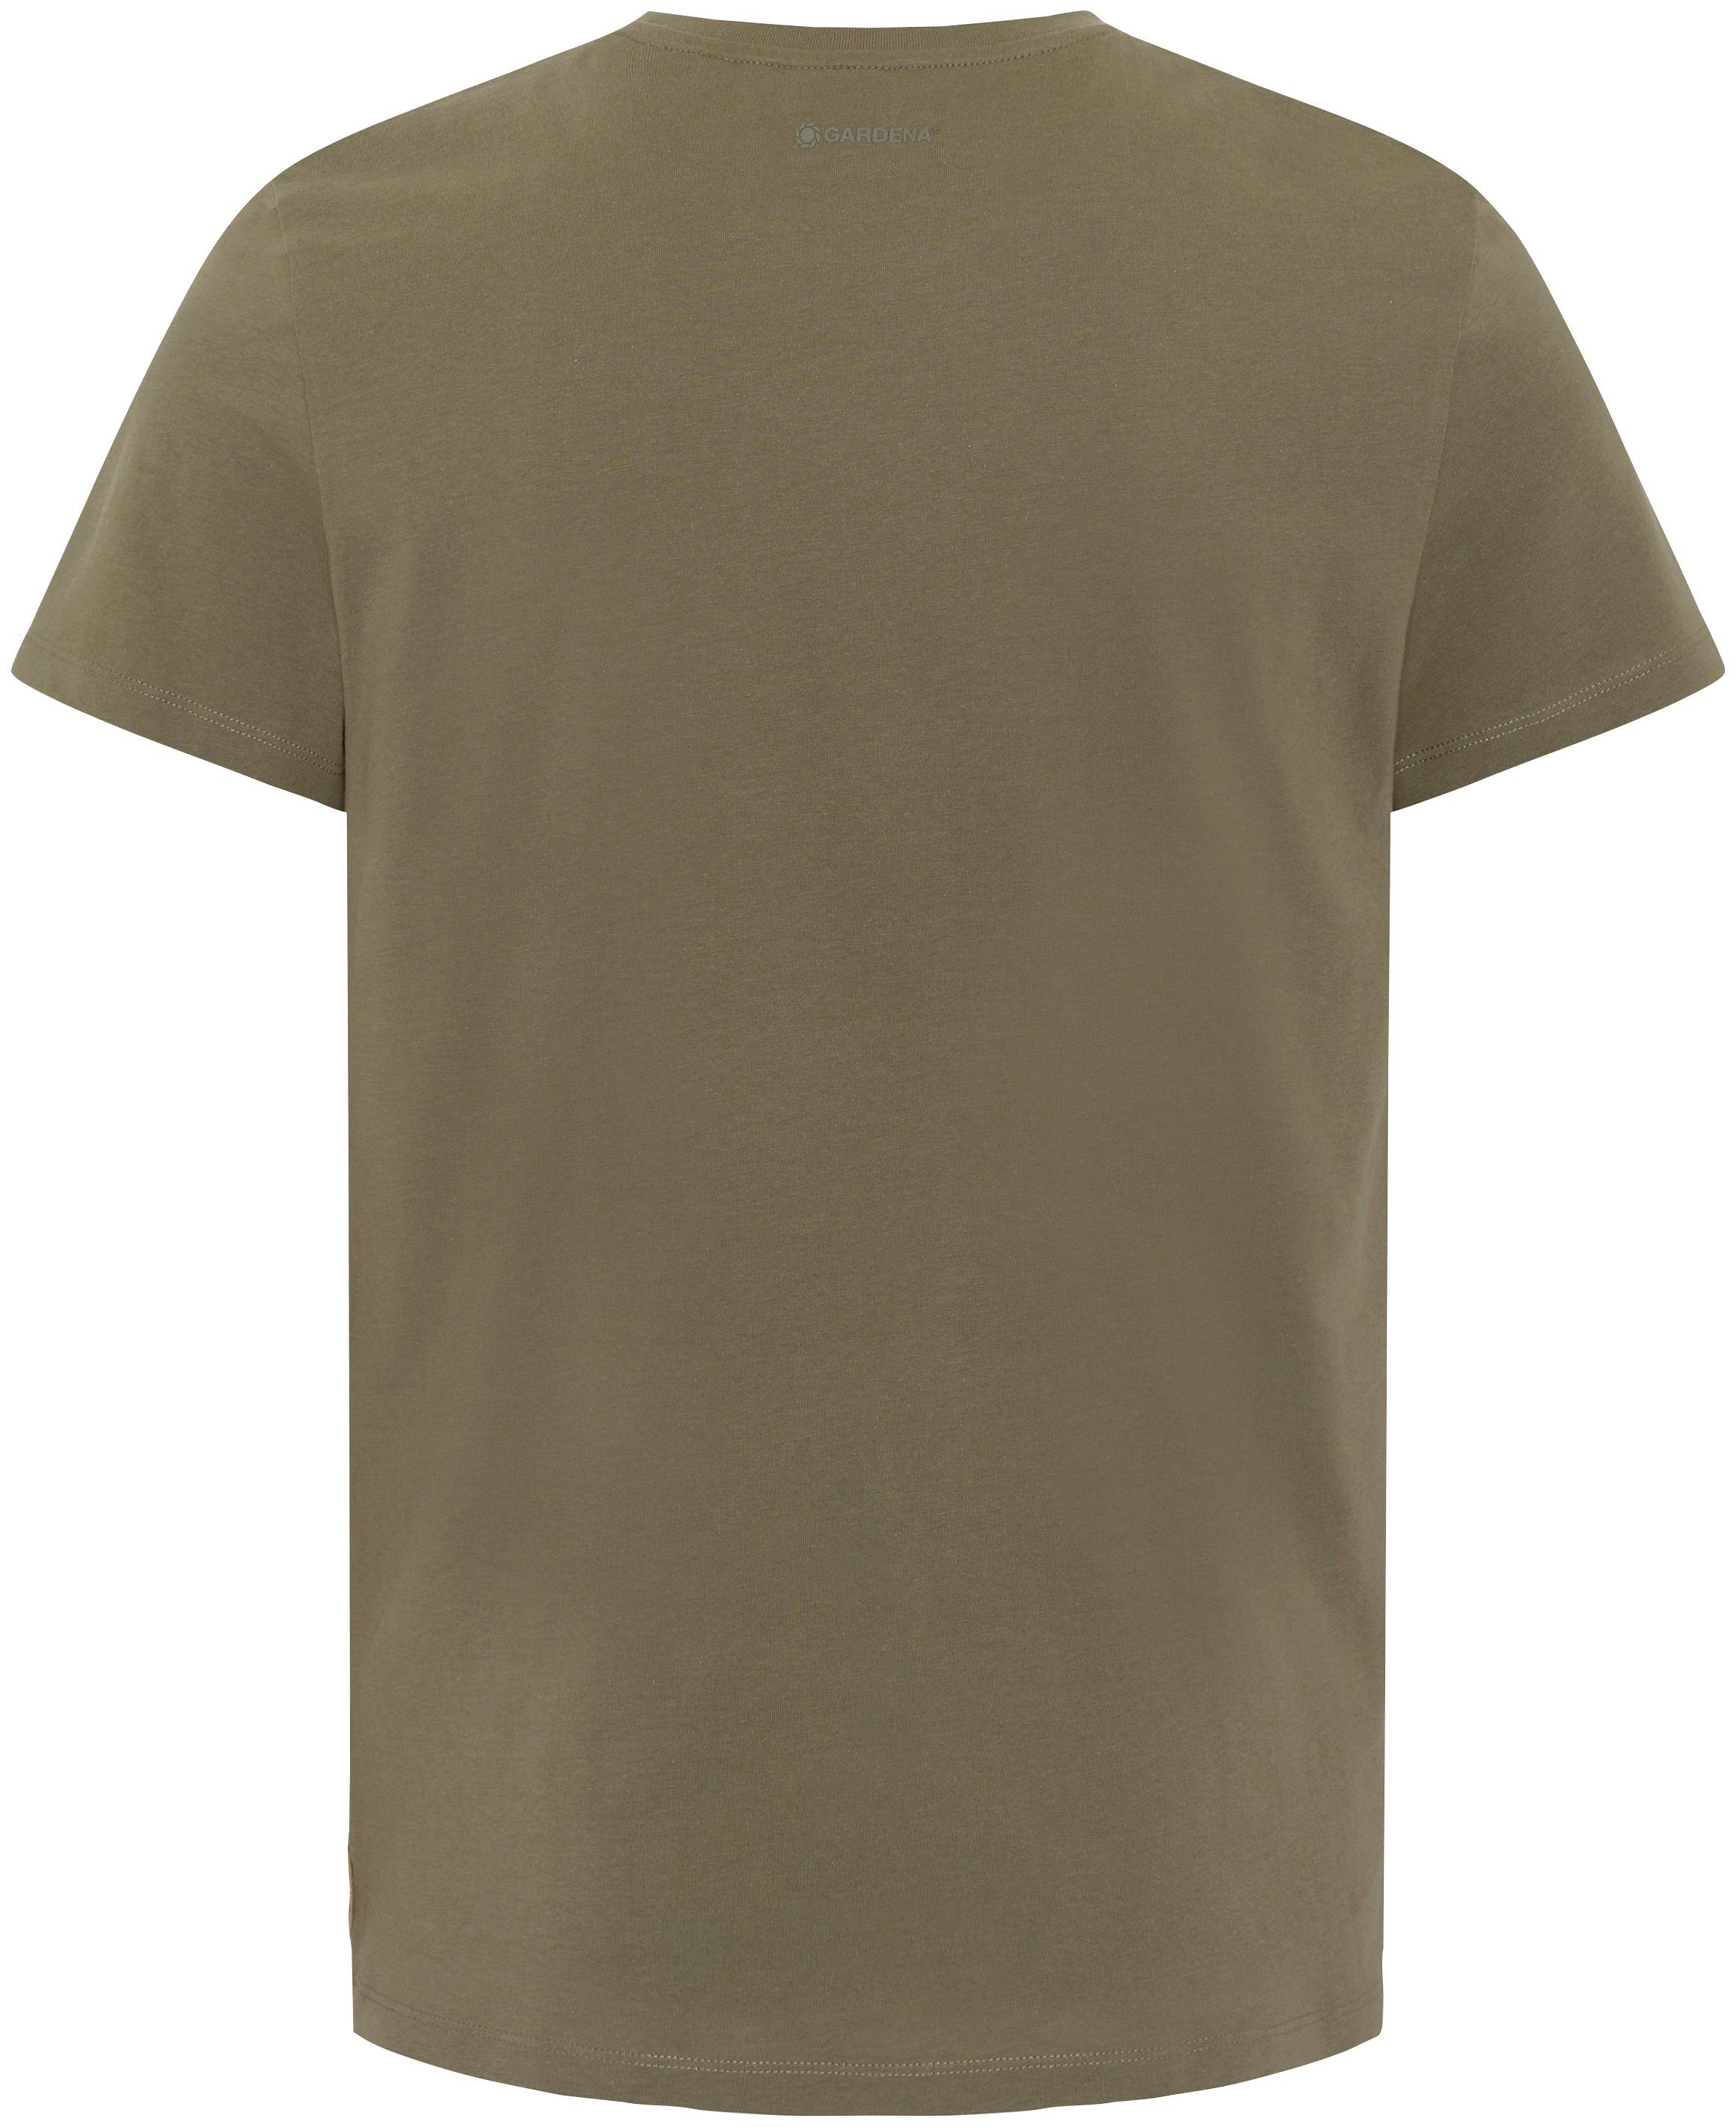 GARDENA Dusty Olive T-Shirt